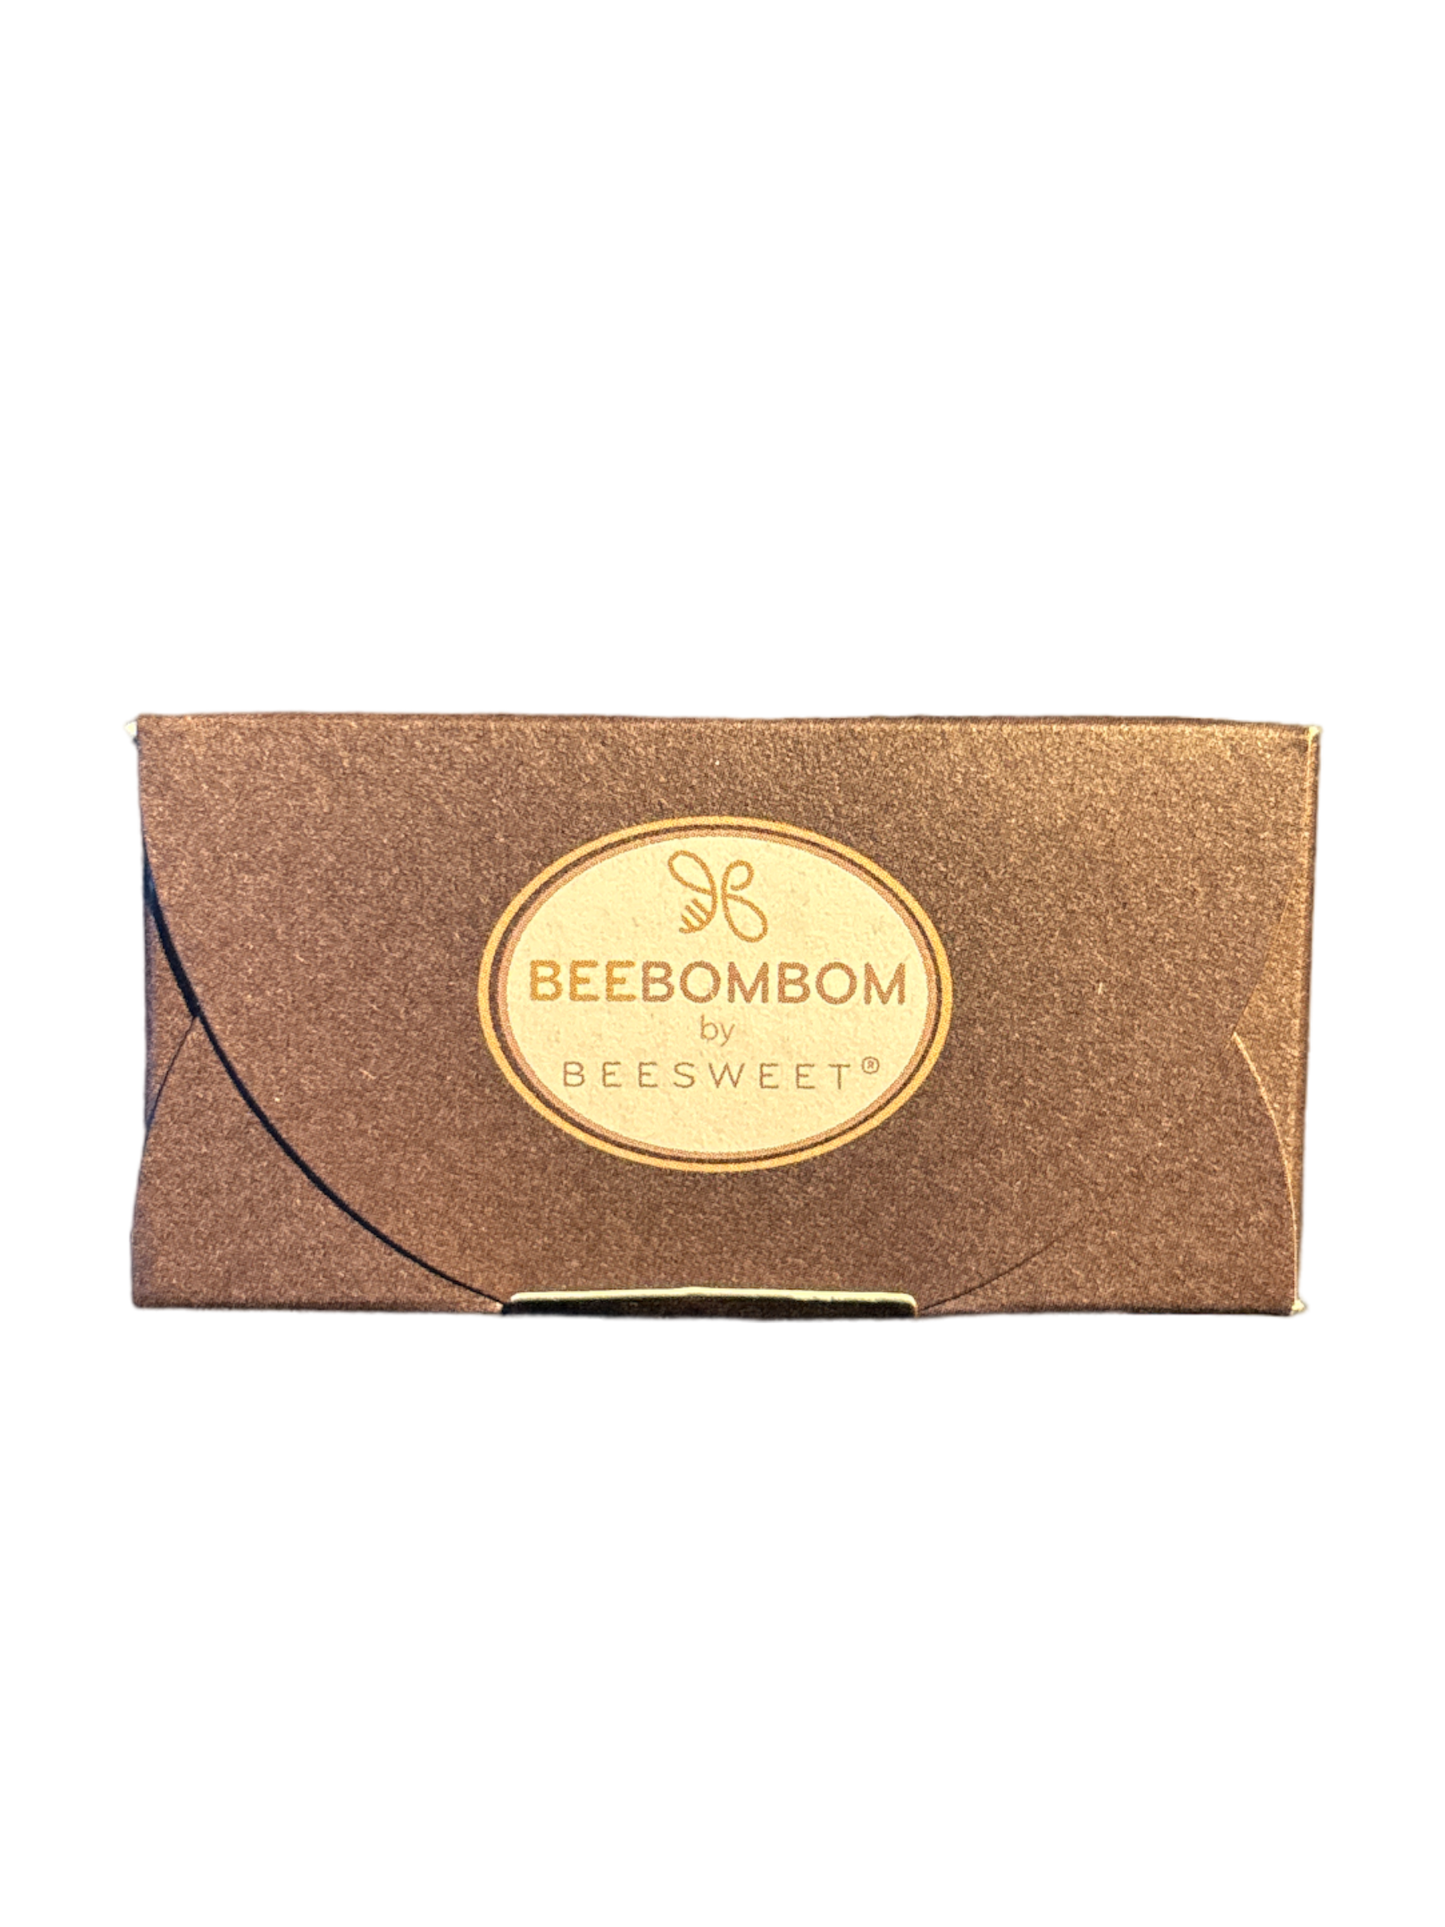 BEEBOMBOM (2 pack)